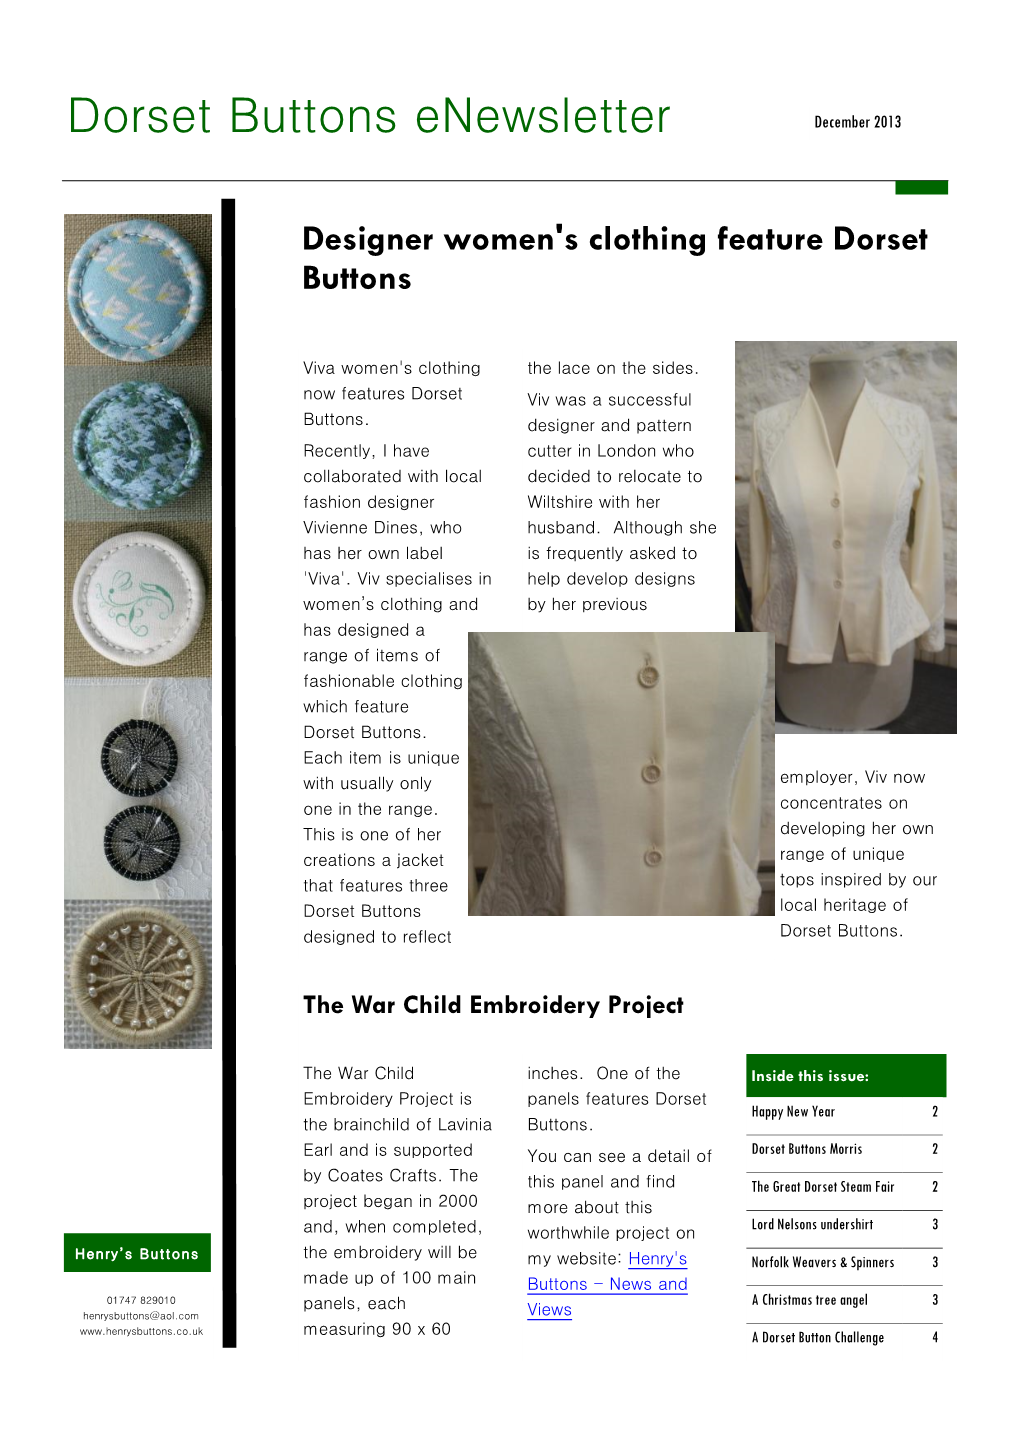 Dorset Buttons Enewsletter December 2013